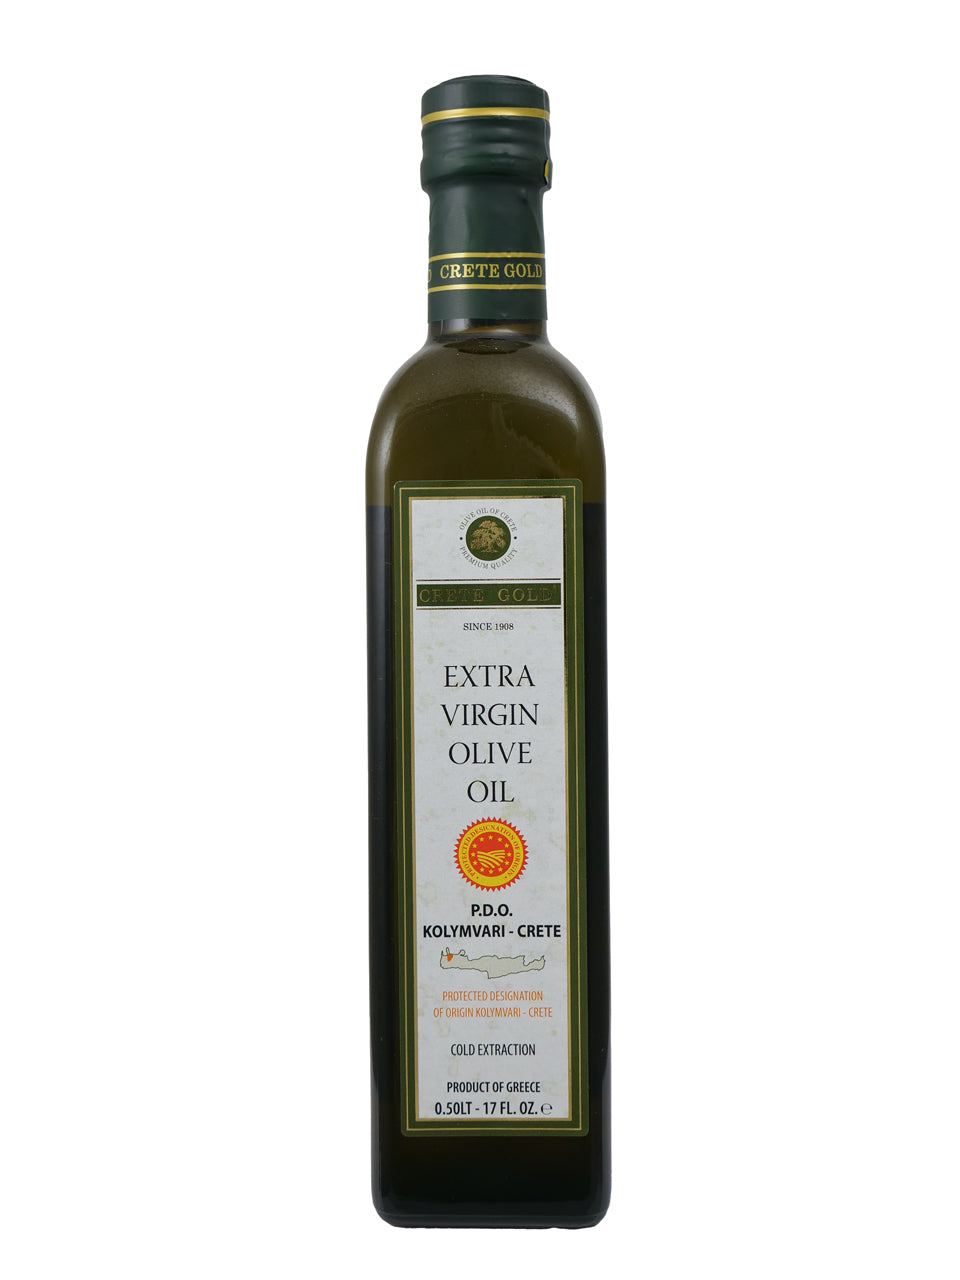 olive oil in glass bottle